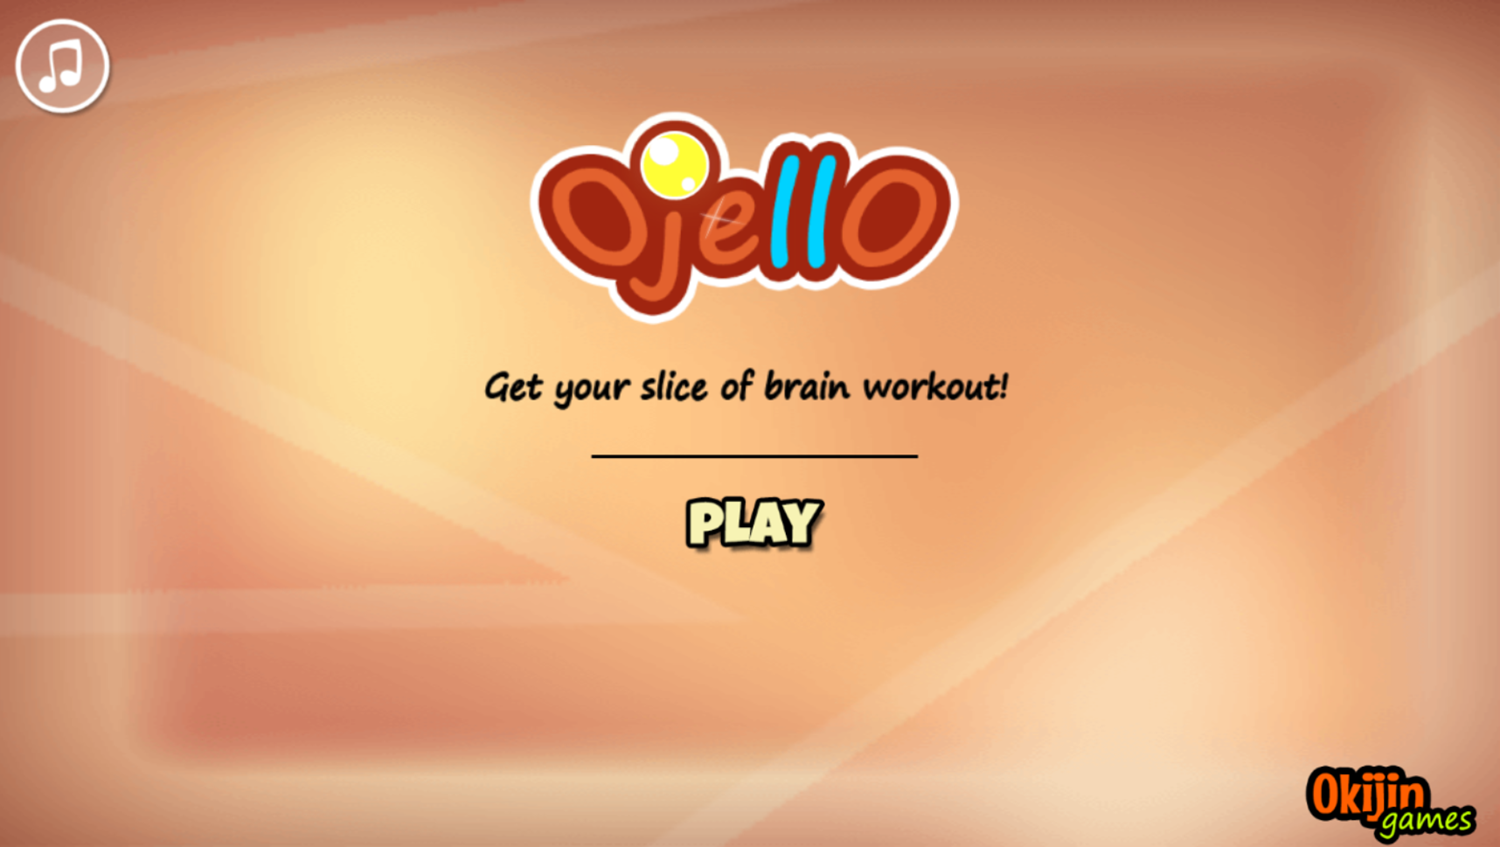 Ojello Game Welcome Screen Screenshot.